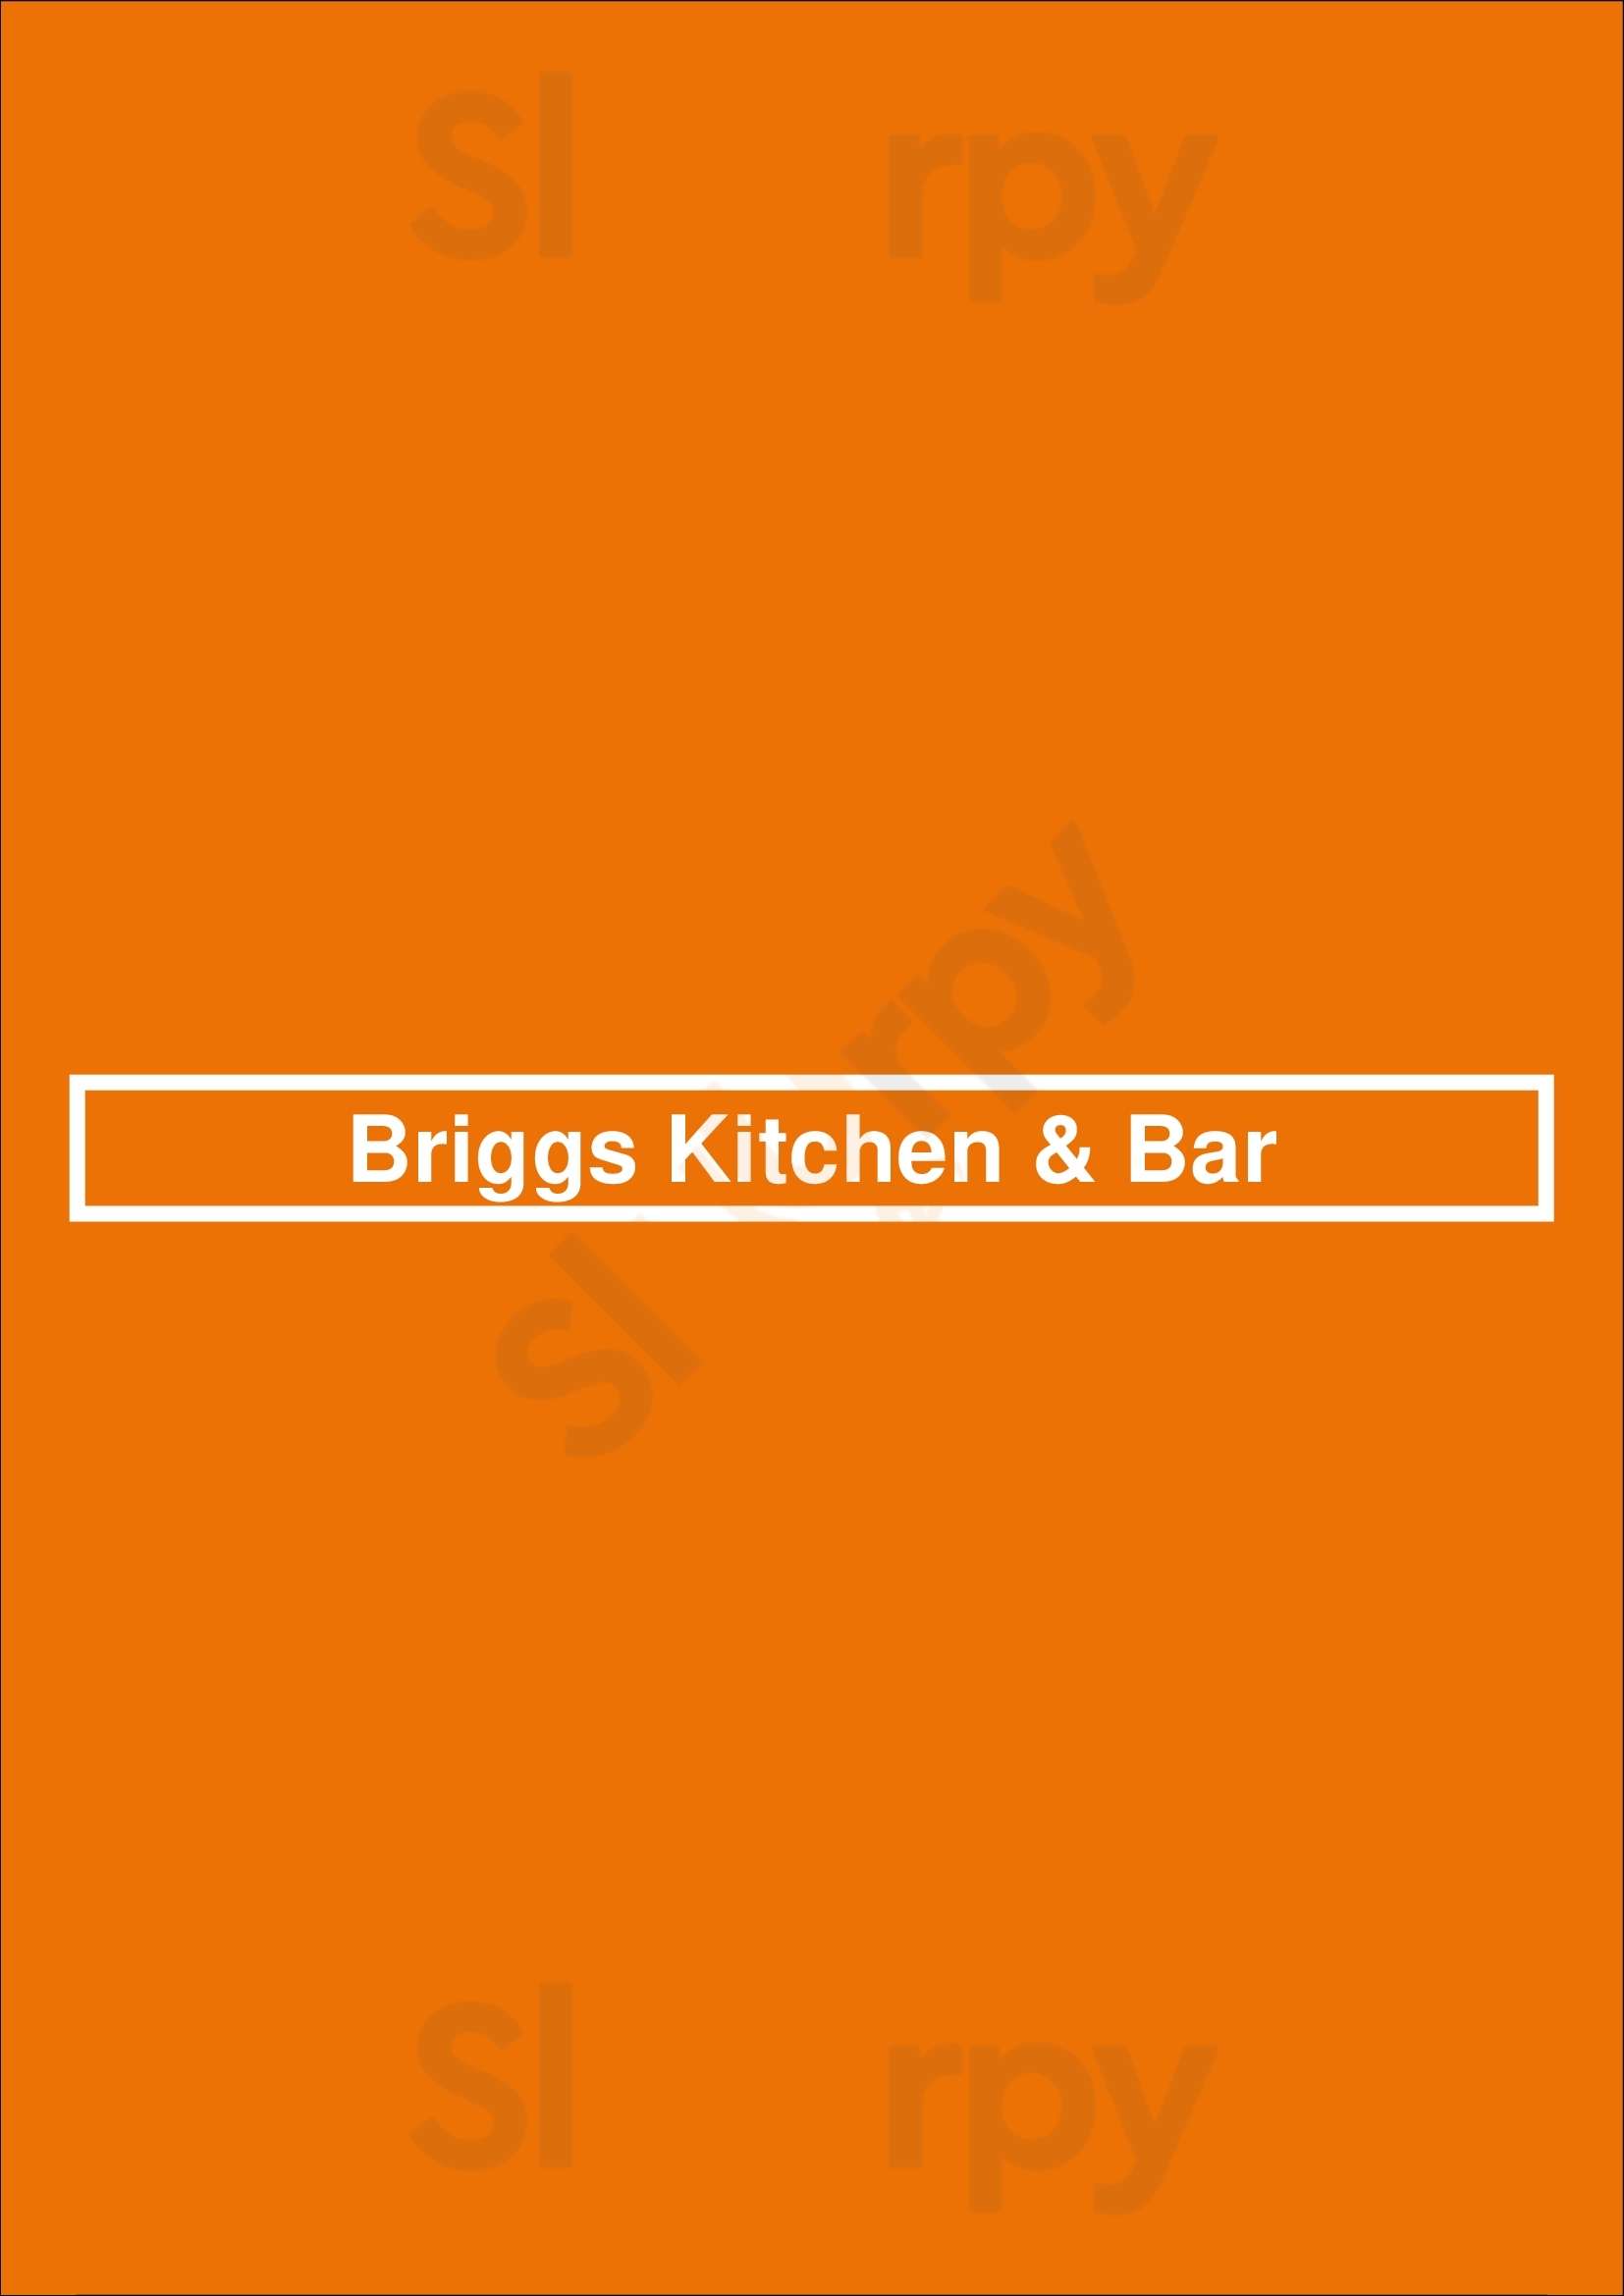 Briggs Kitchen & Bar Calgary Menu - 1